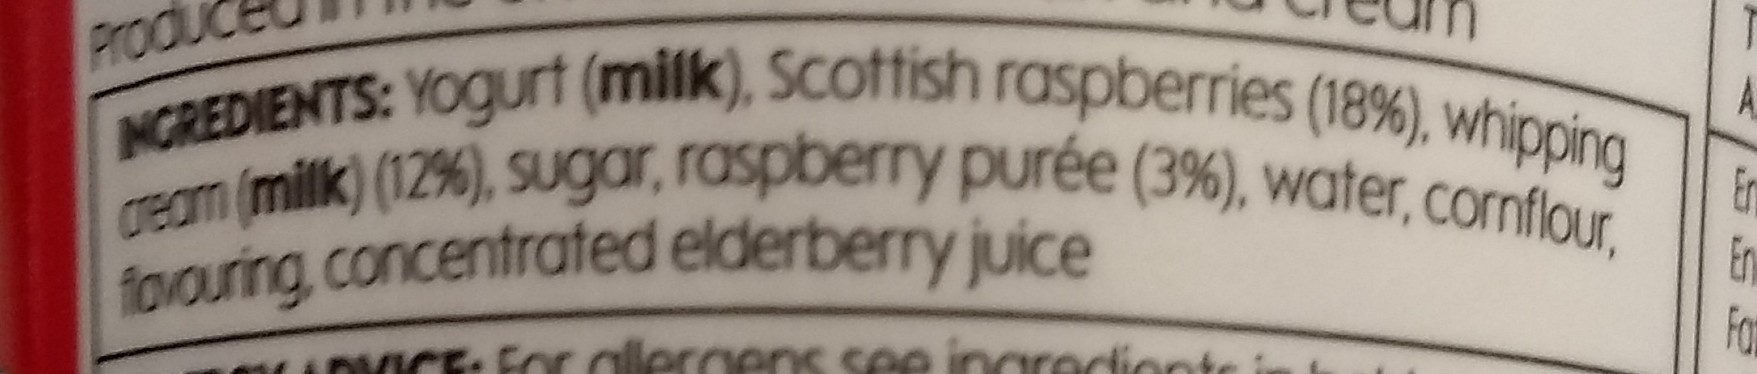 Raspberry - Ingredienser - en